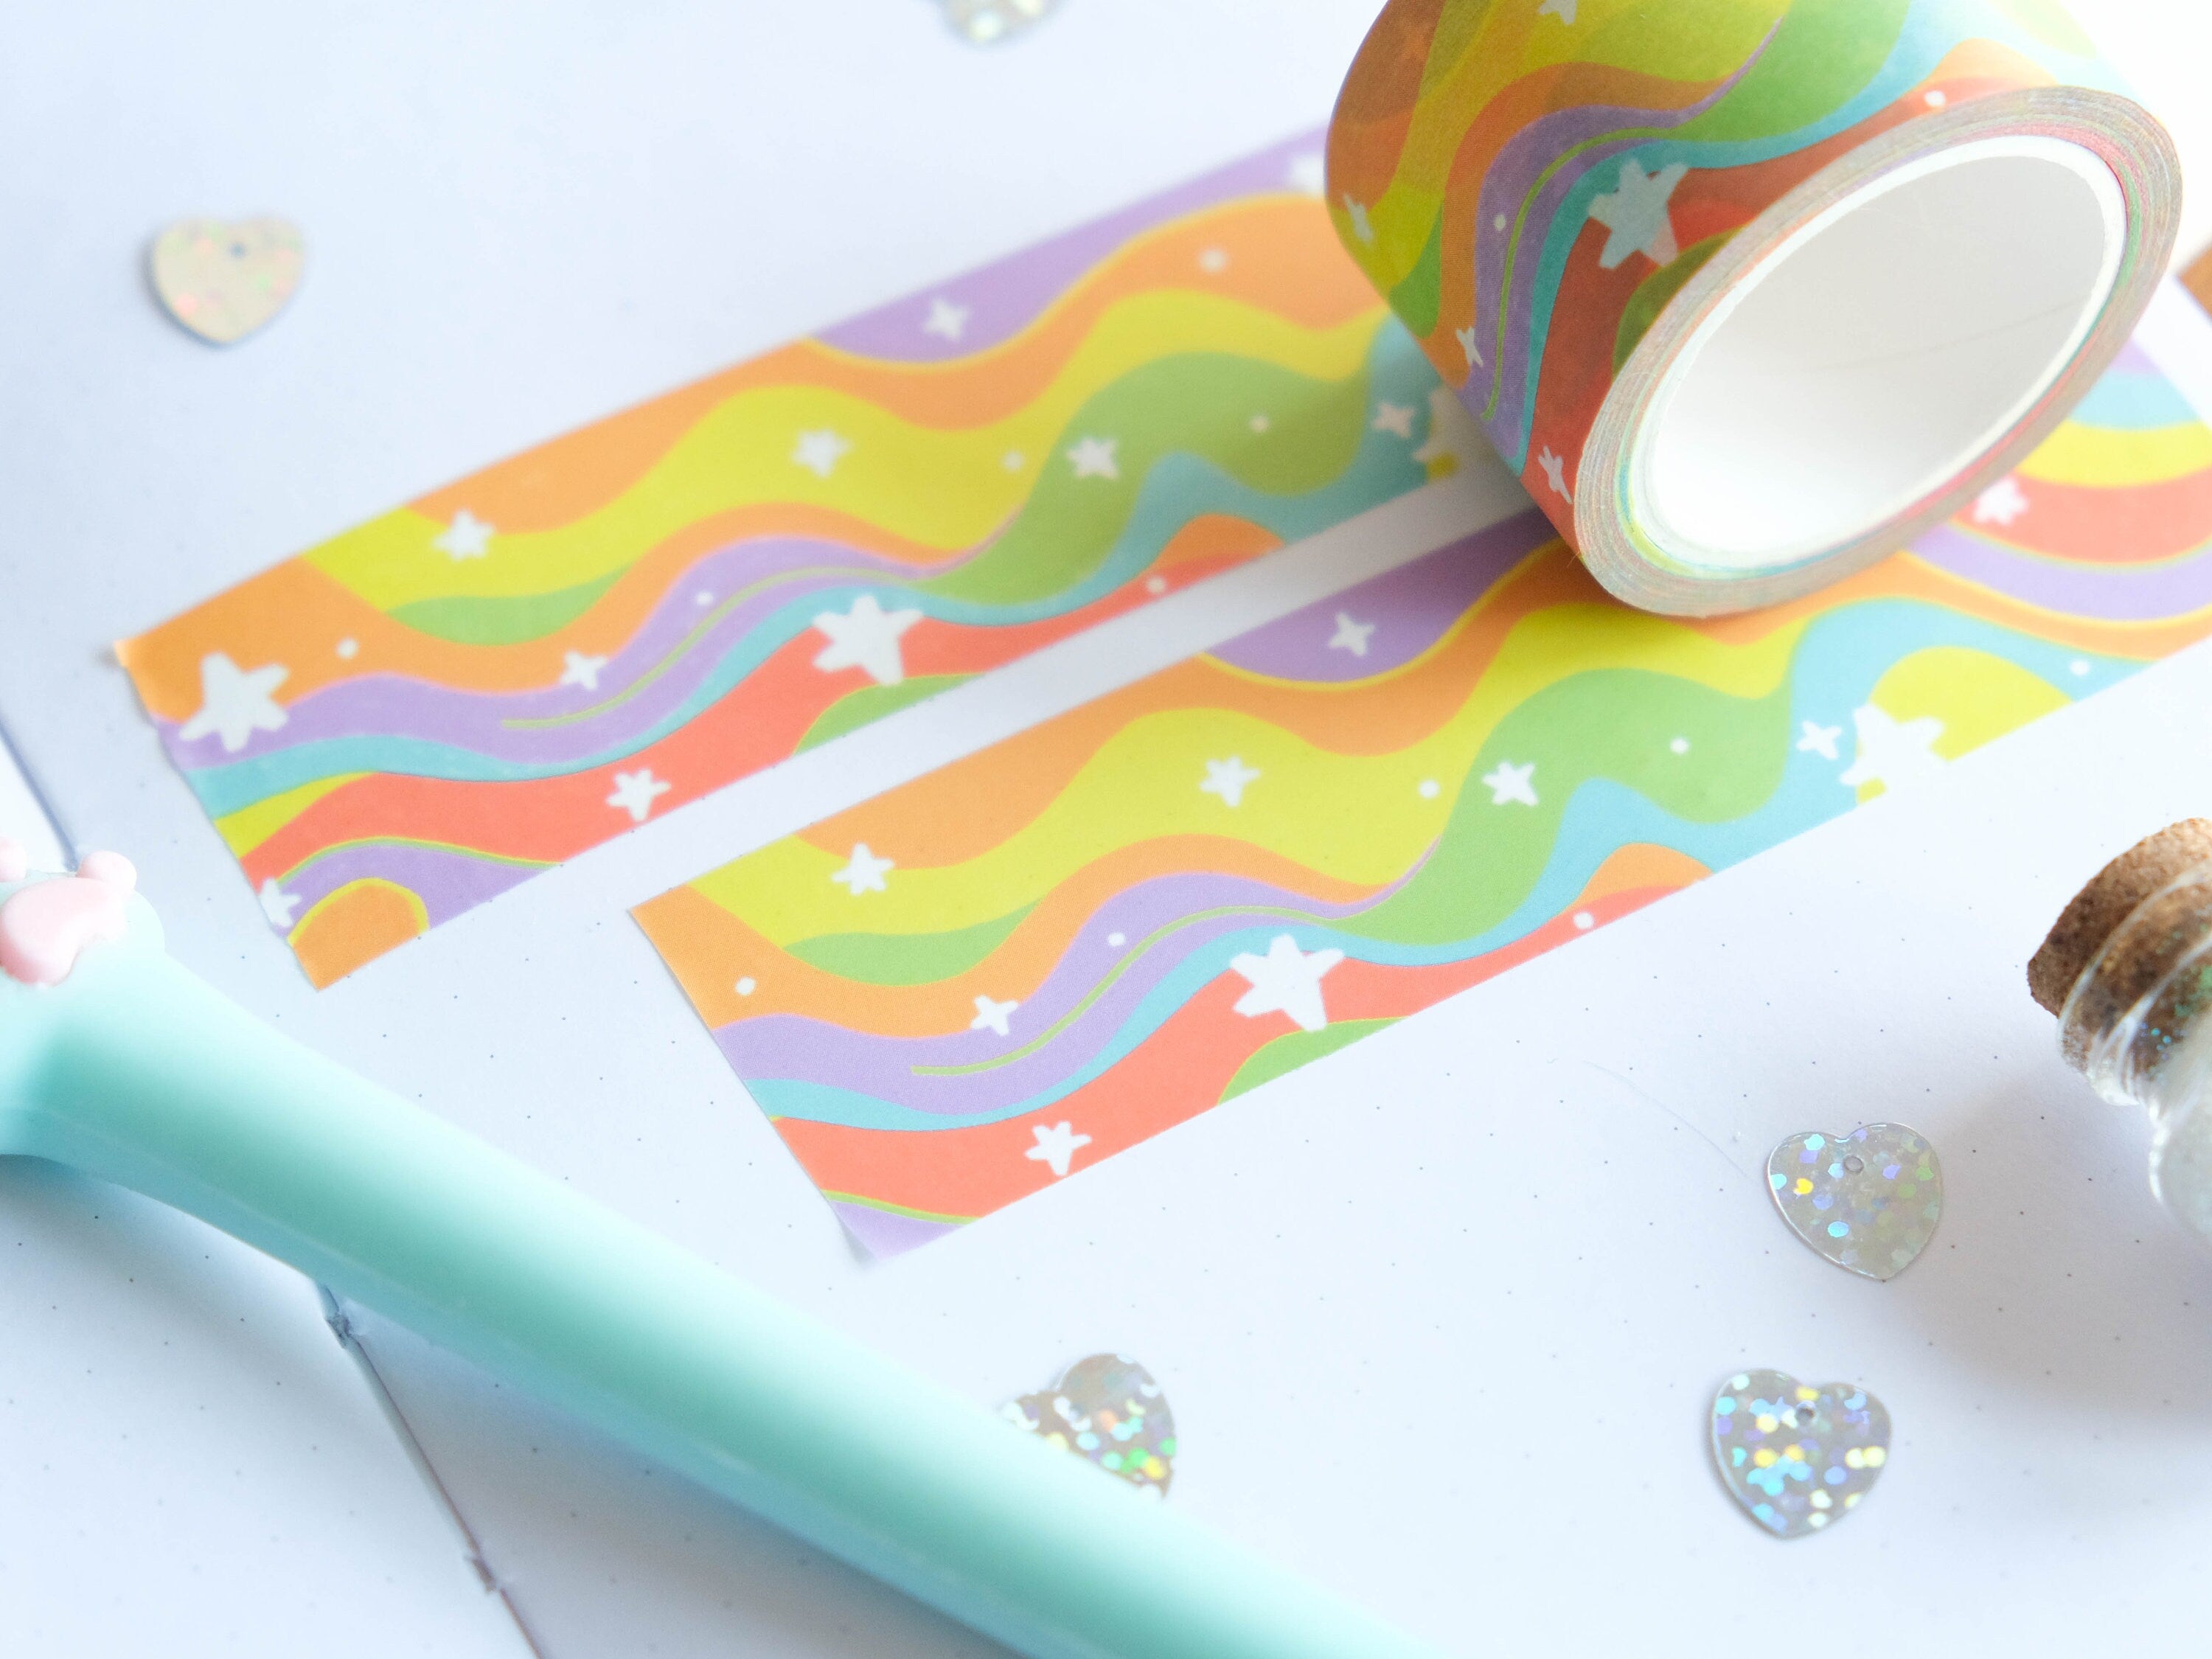 Kawaii Rainbow Wide Washi tape – Sparkles in the Wild